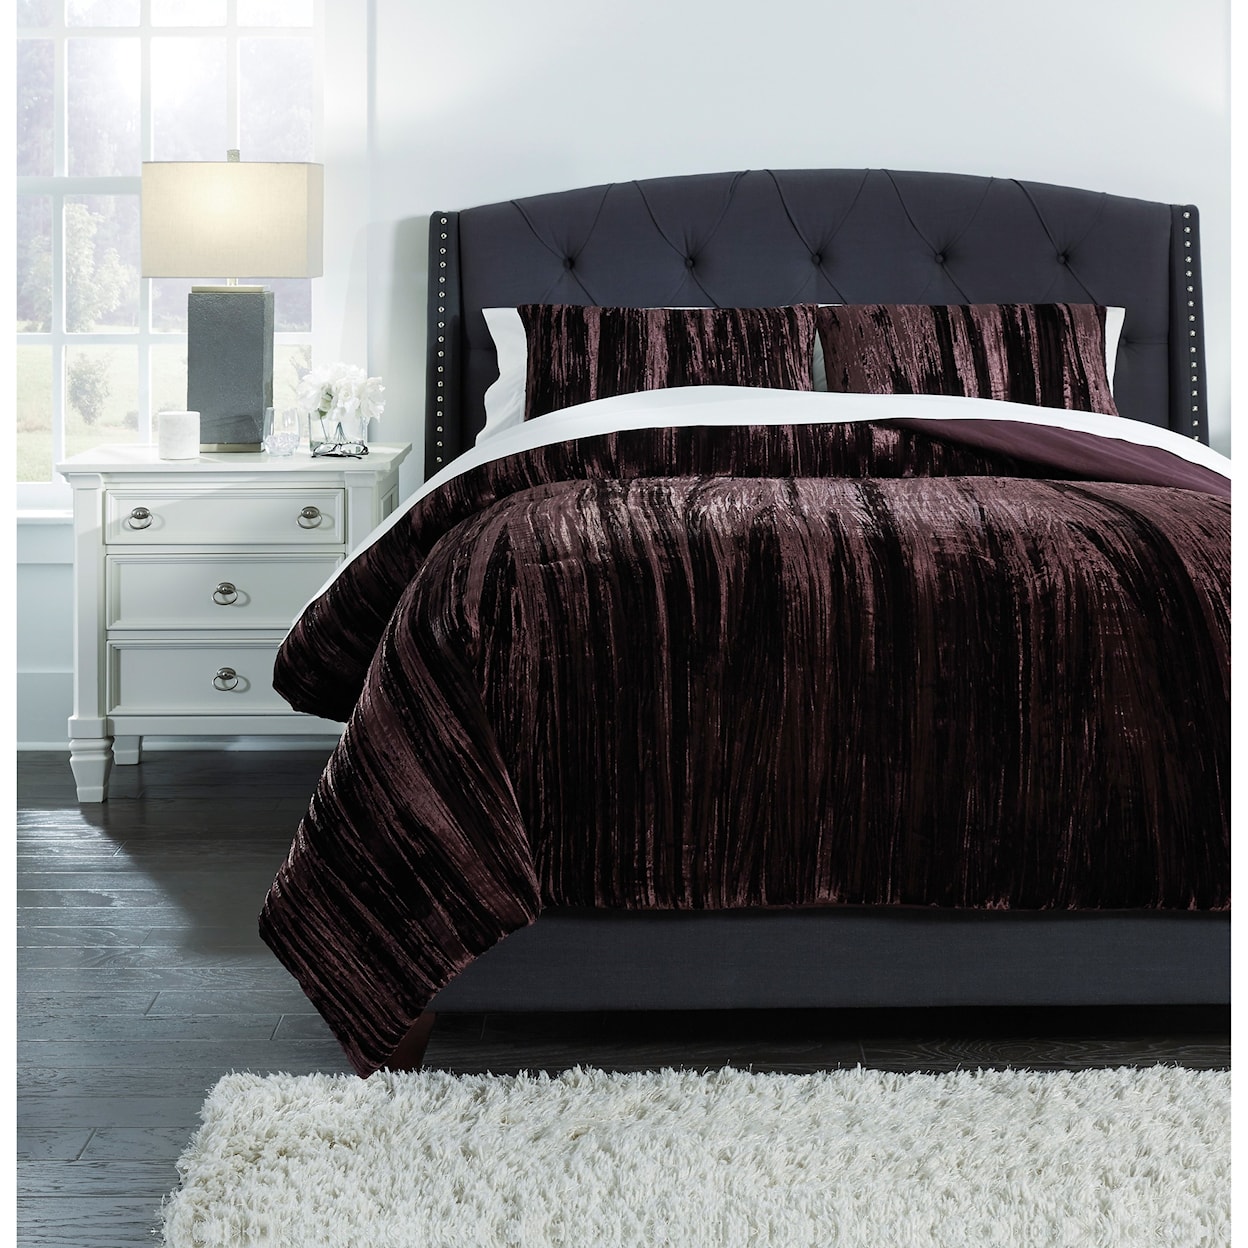 Ashley Furniture Signature Design Bedding Sets King Wanete Wine Comforter Set